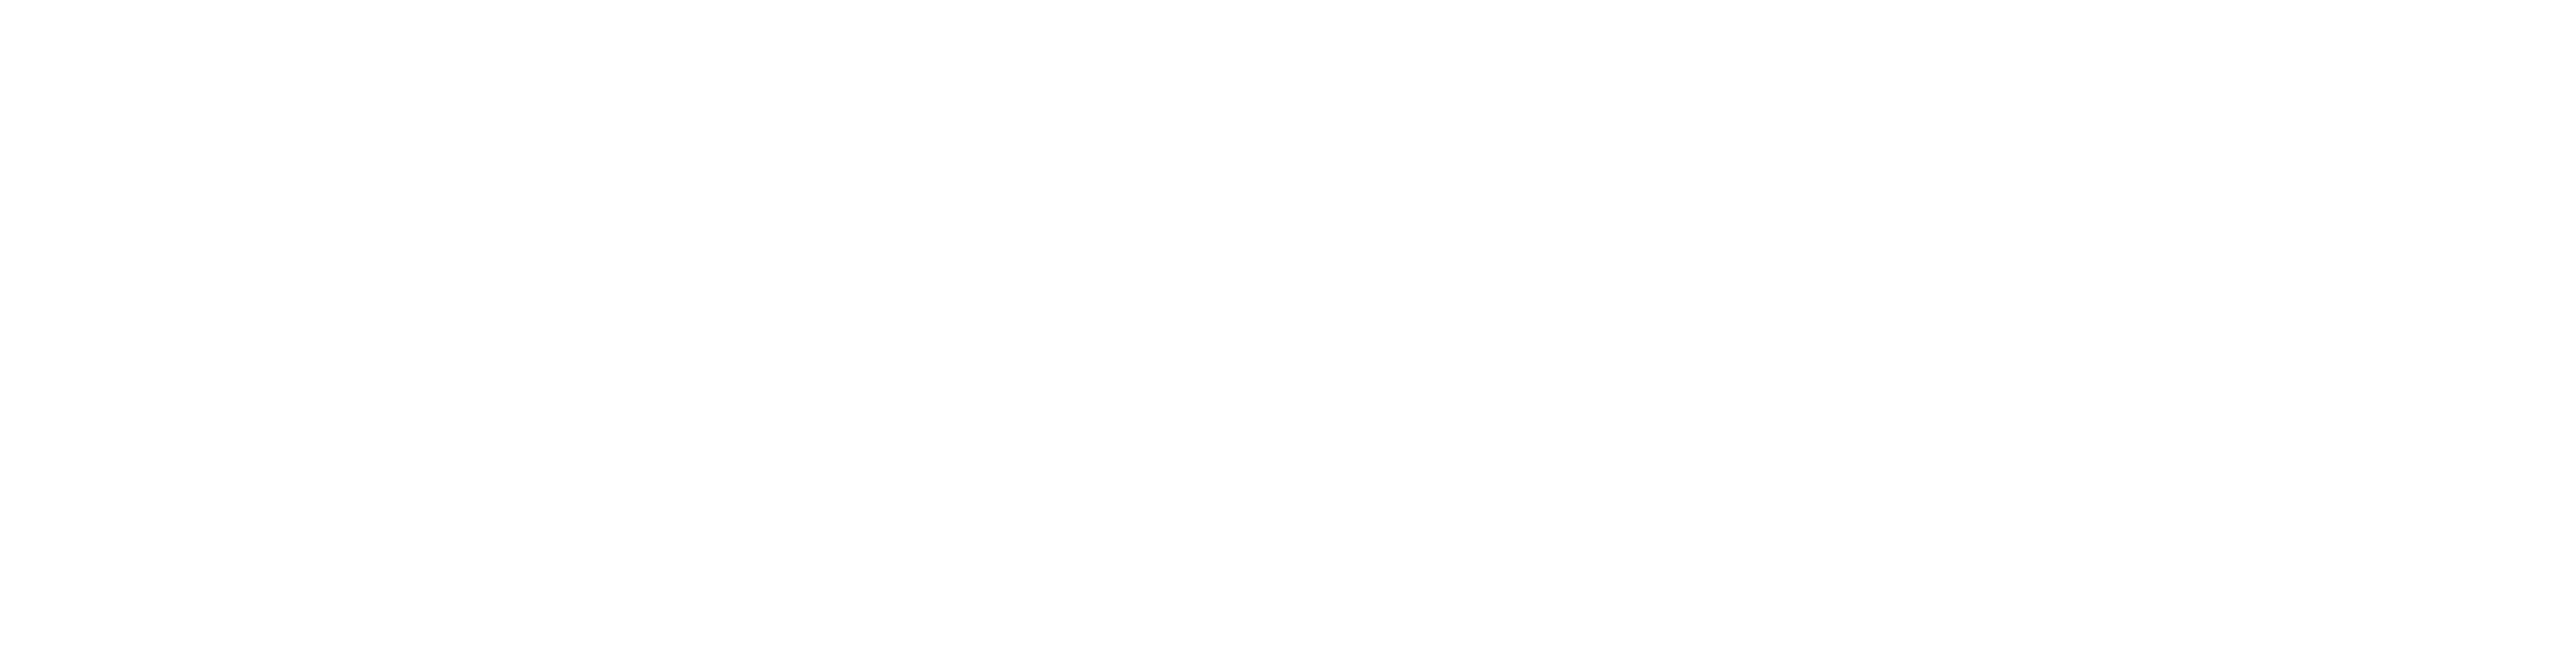 BarkBound Logo - Horizontal - White